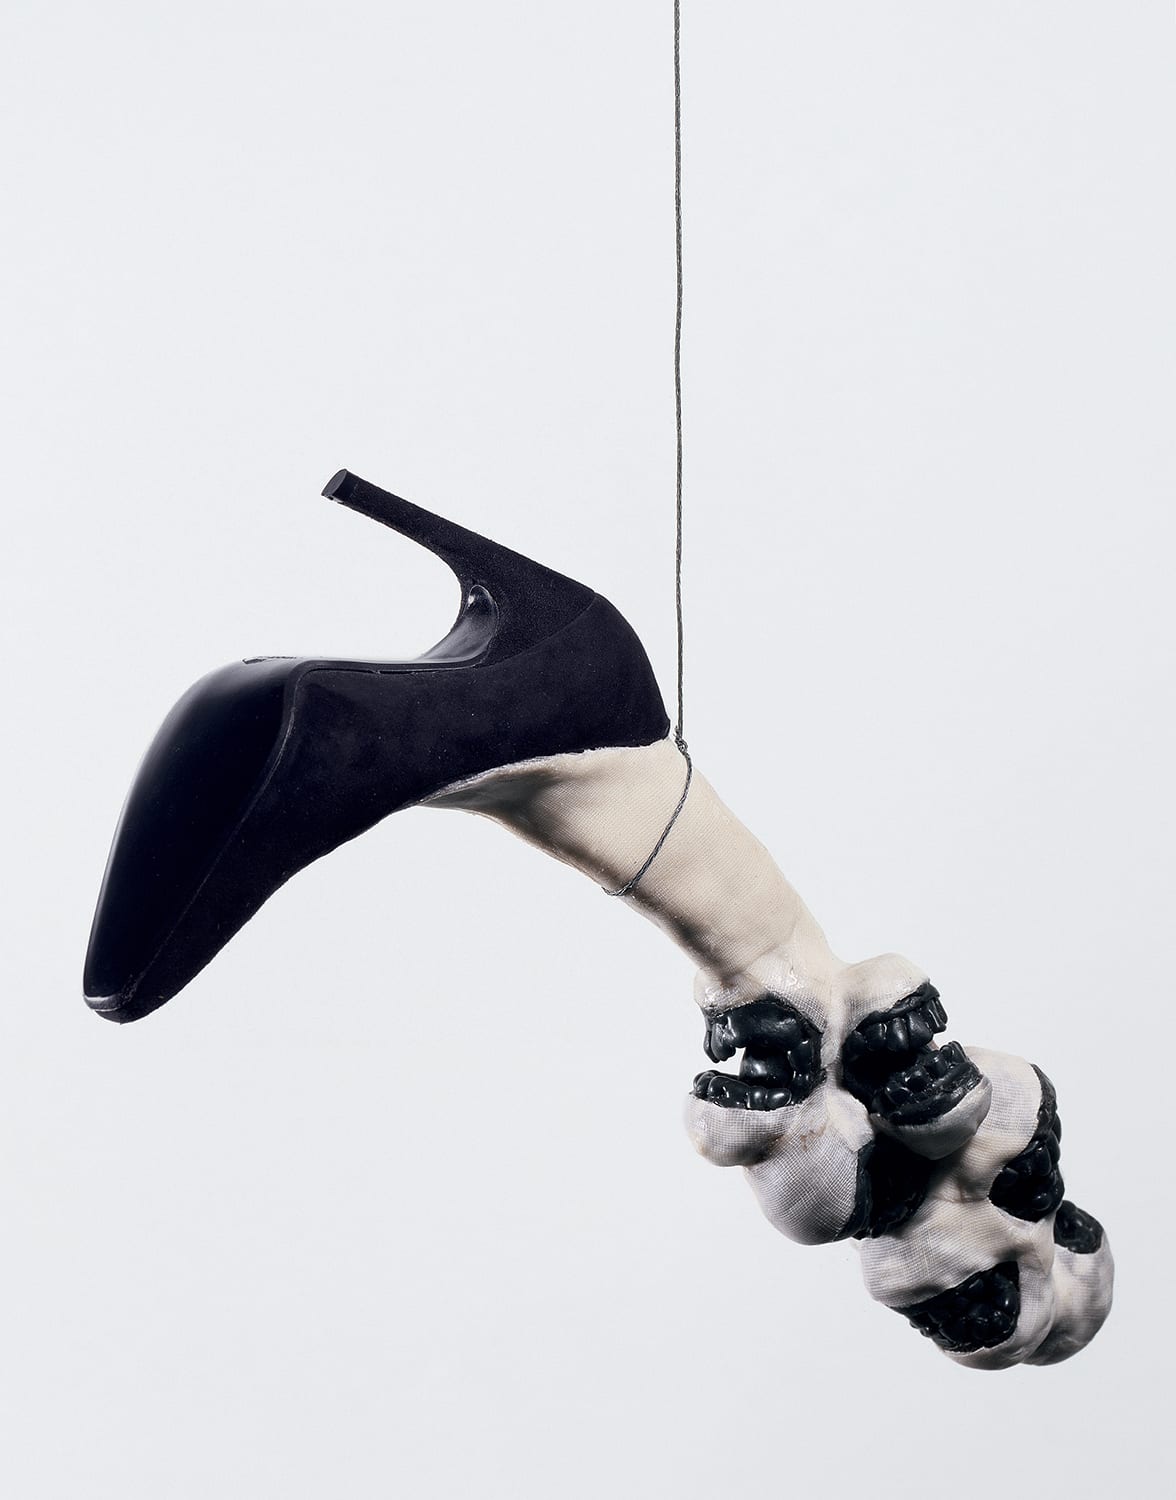 Rona Pondick, Untitled Shoe, 1995. Courtesy of the artist and Steven Zevitas Gallery, Boston.